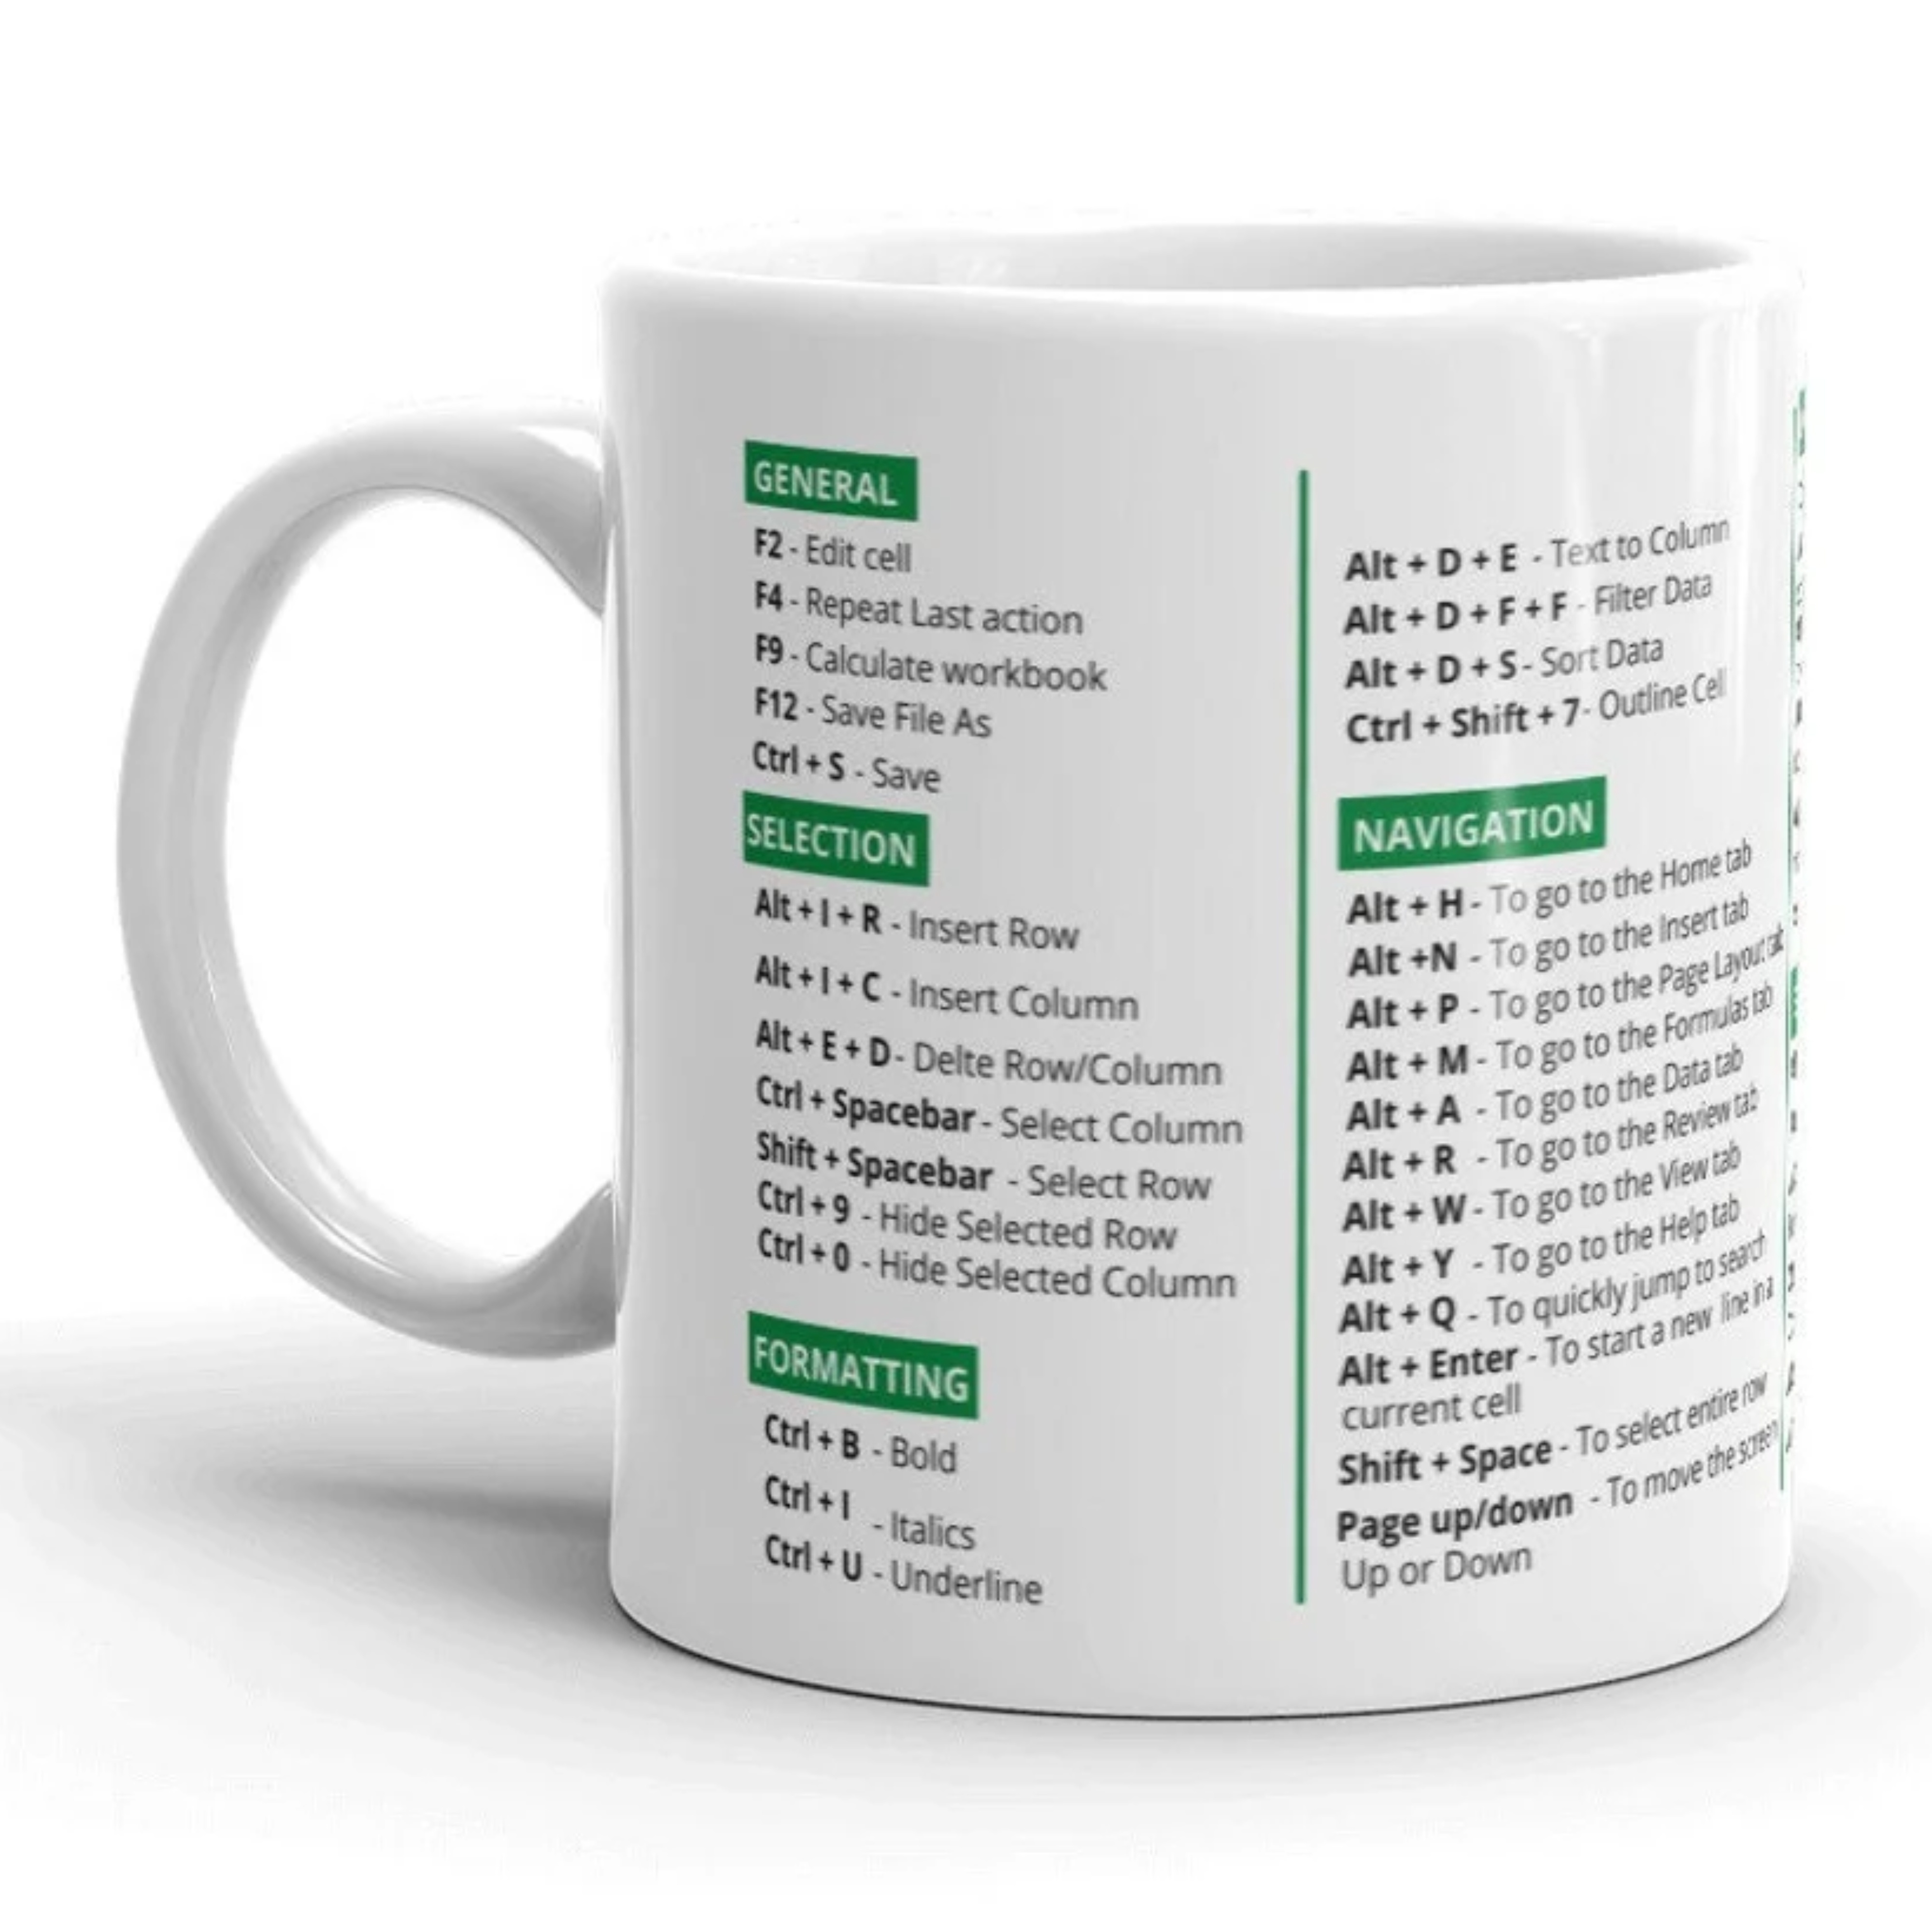 Freak In The Sheets Excel Spreadsheet Mug, Funny Office Gift - Inspire  Uplift